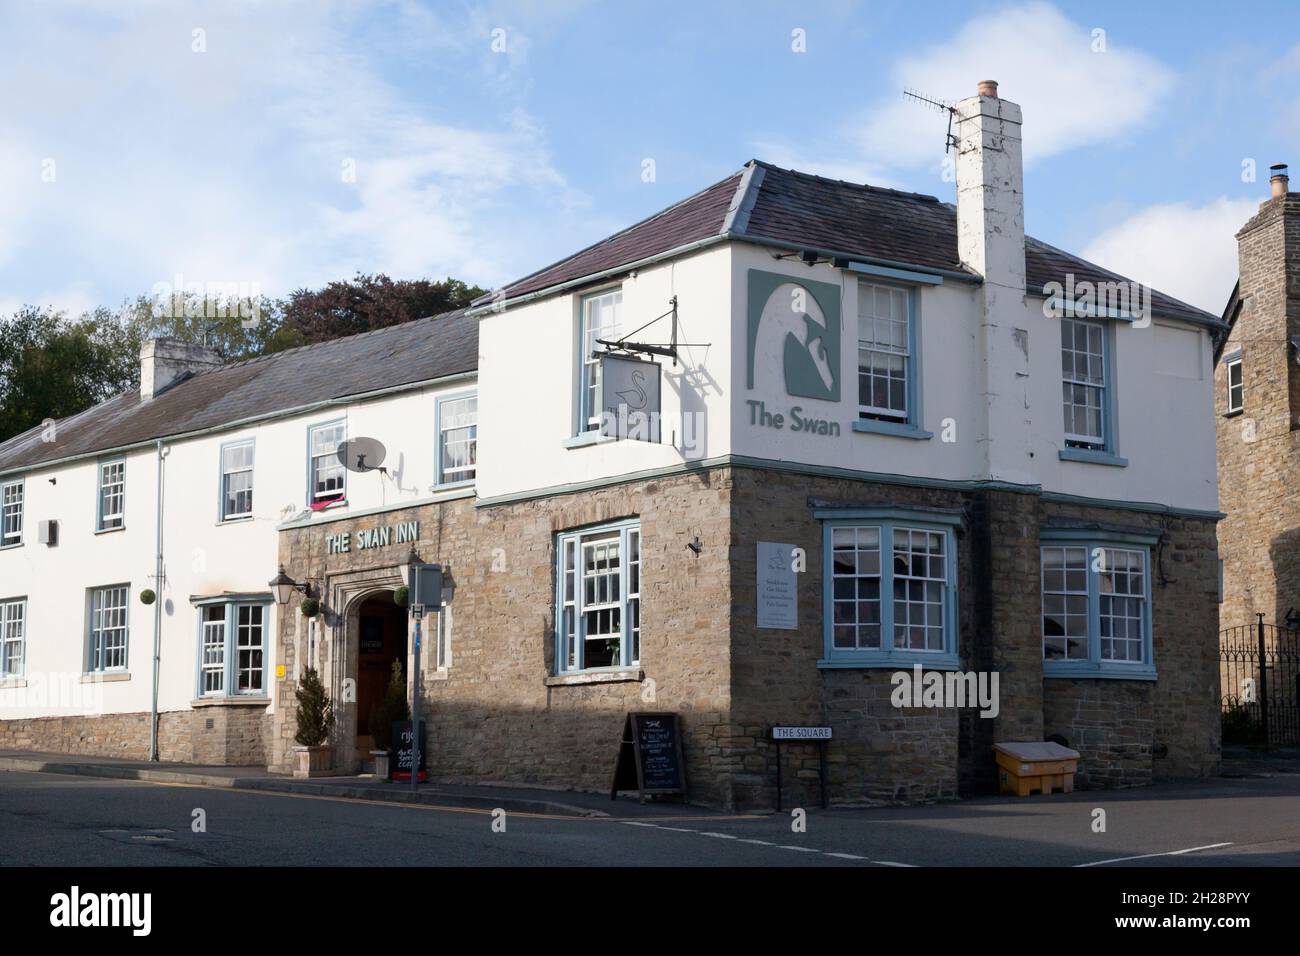 The Swan pub, Kington, Herefordshire Foto Stock